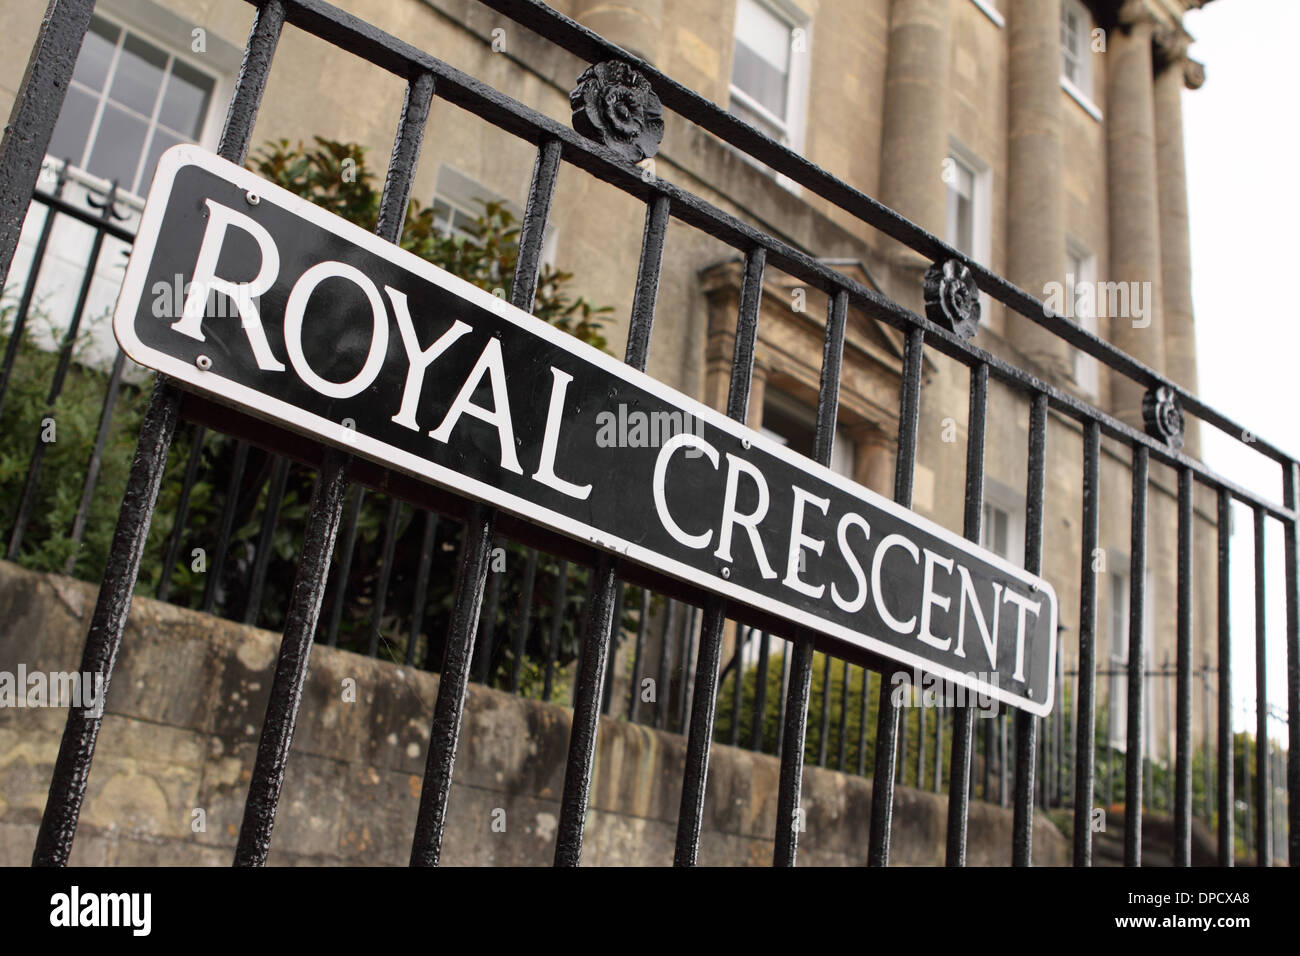 Bad Royal Crescent England UK Stockfoto